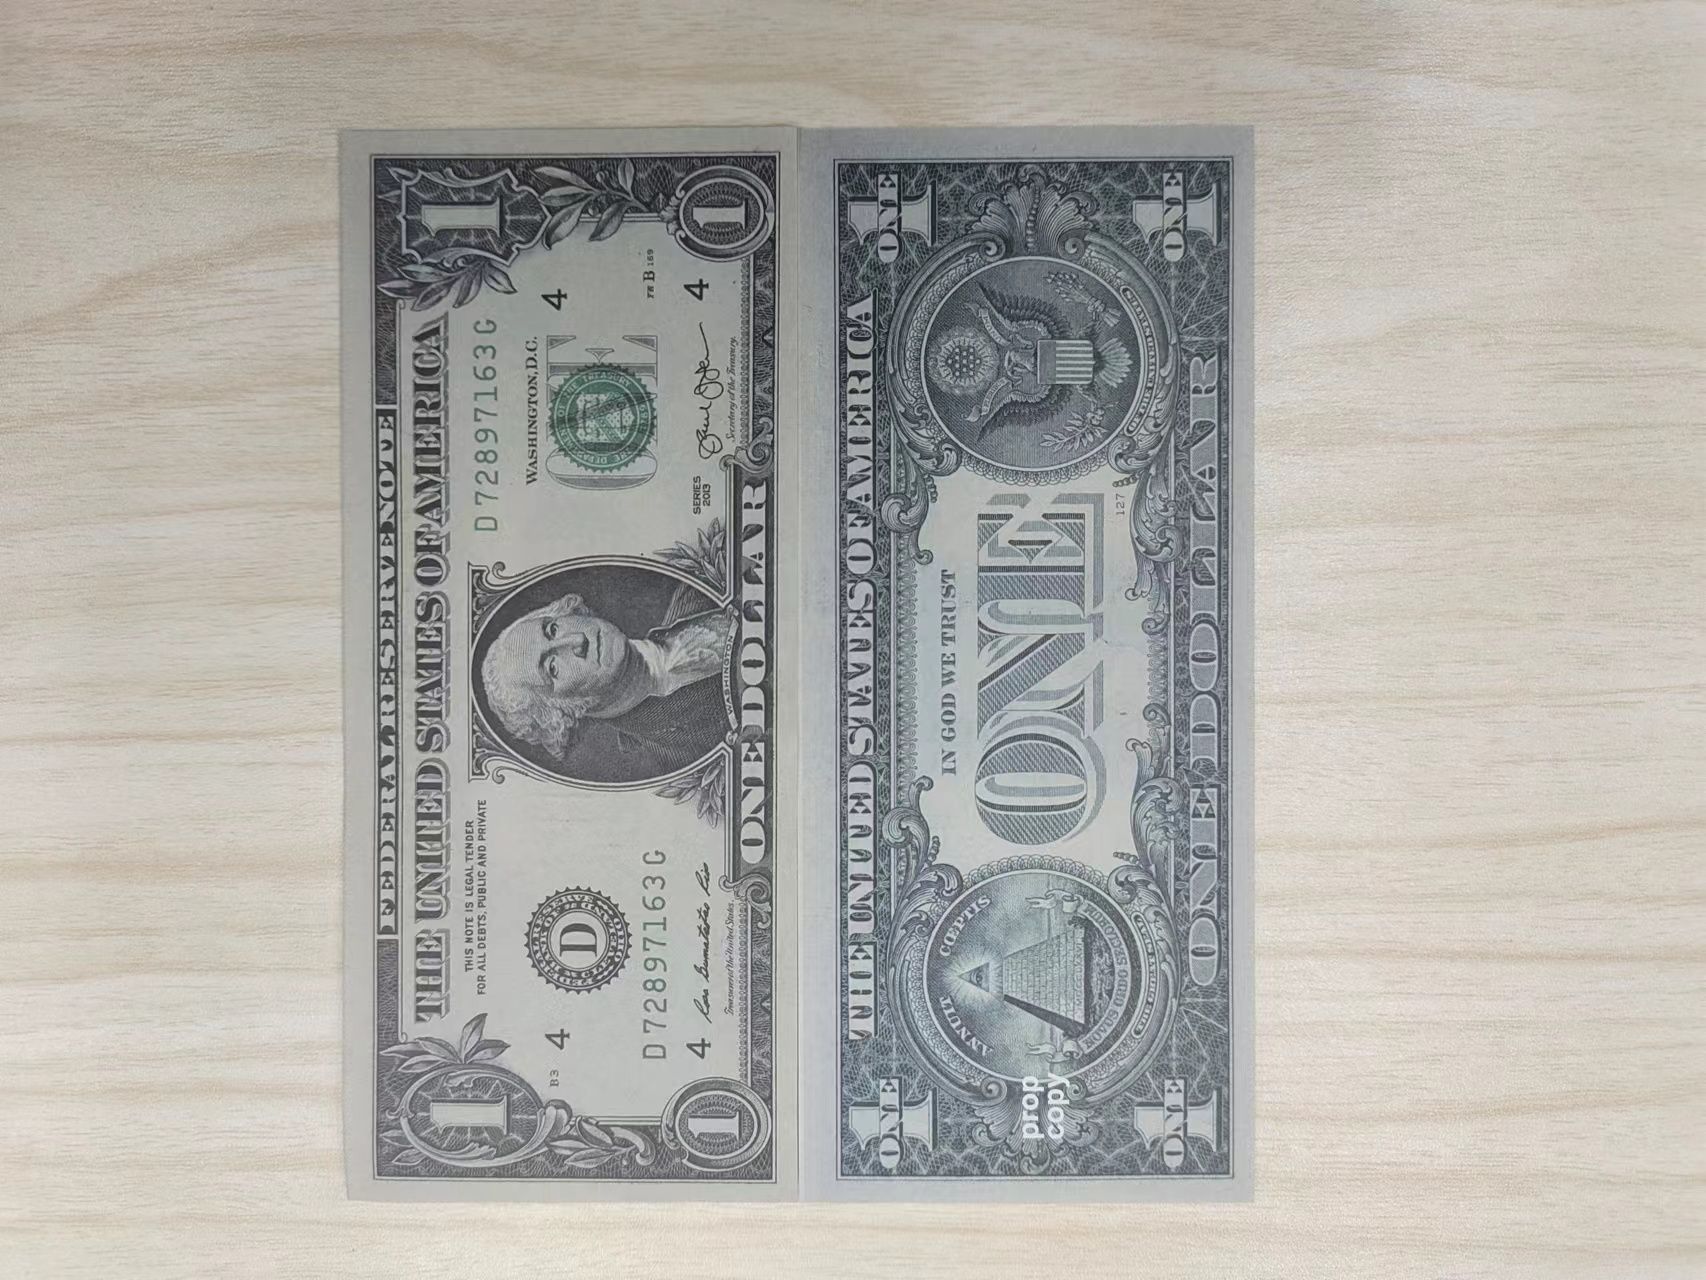 1 dolar